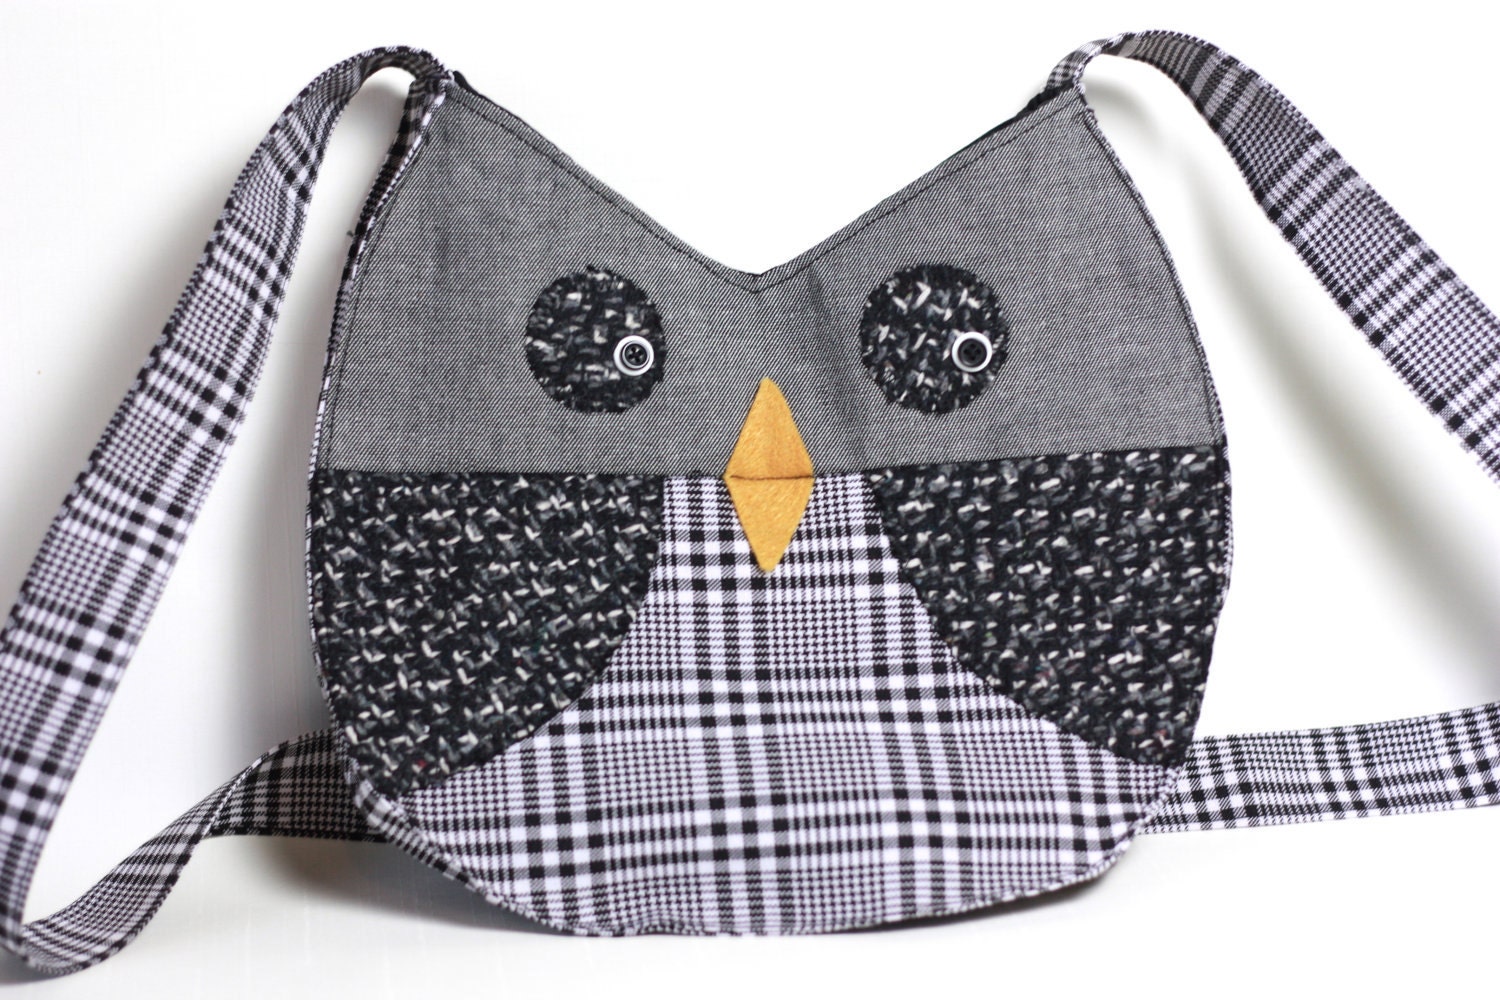 Black and Grey Appliqued Owl Purse Bag